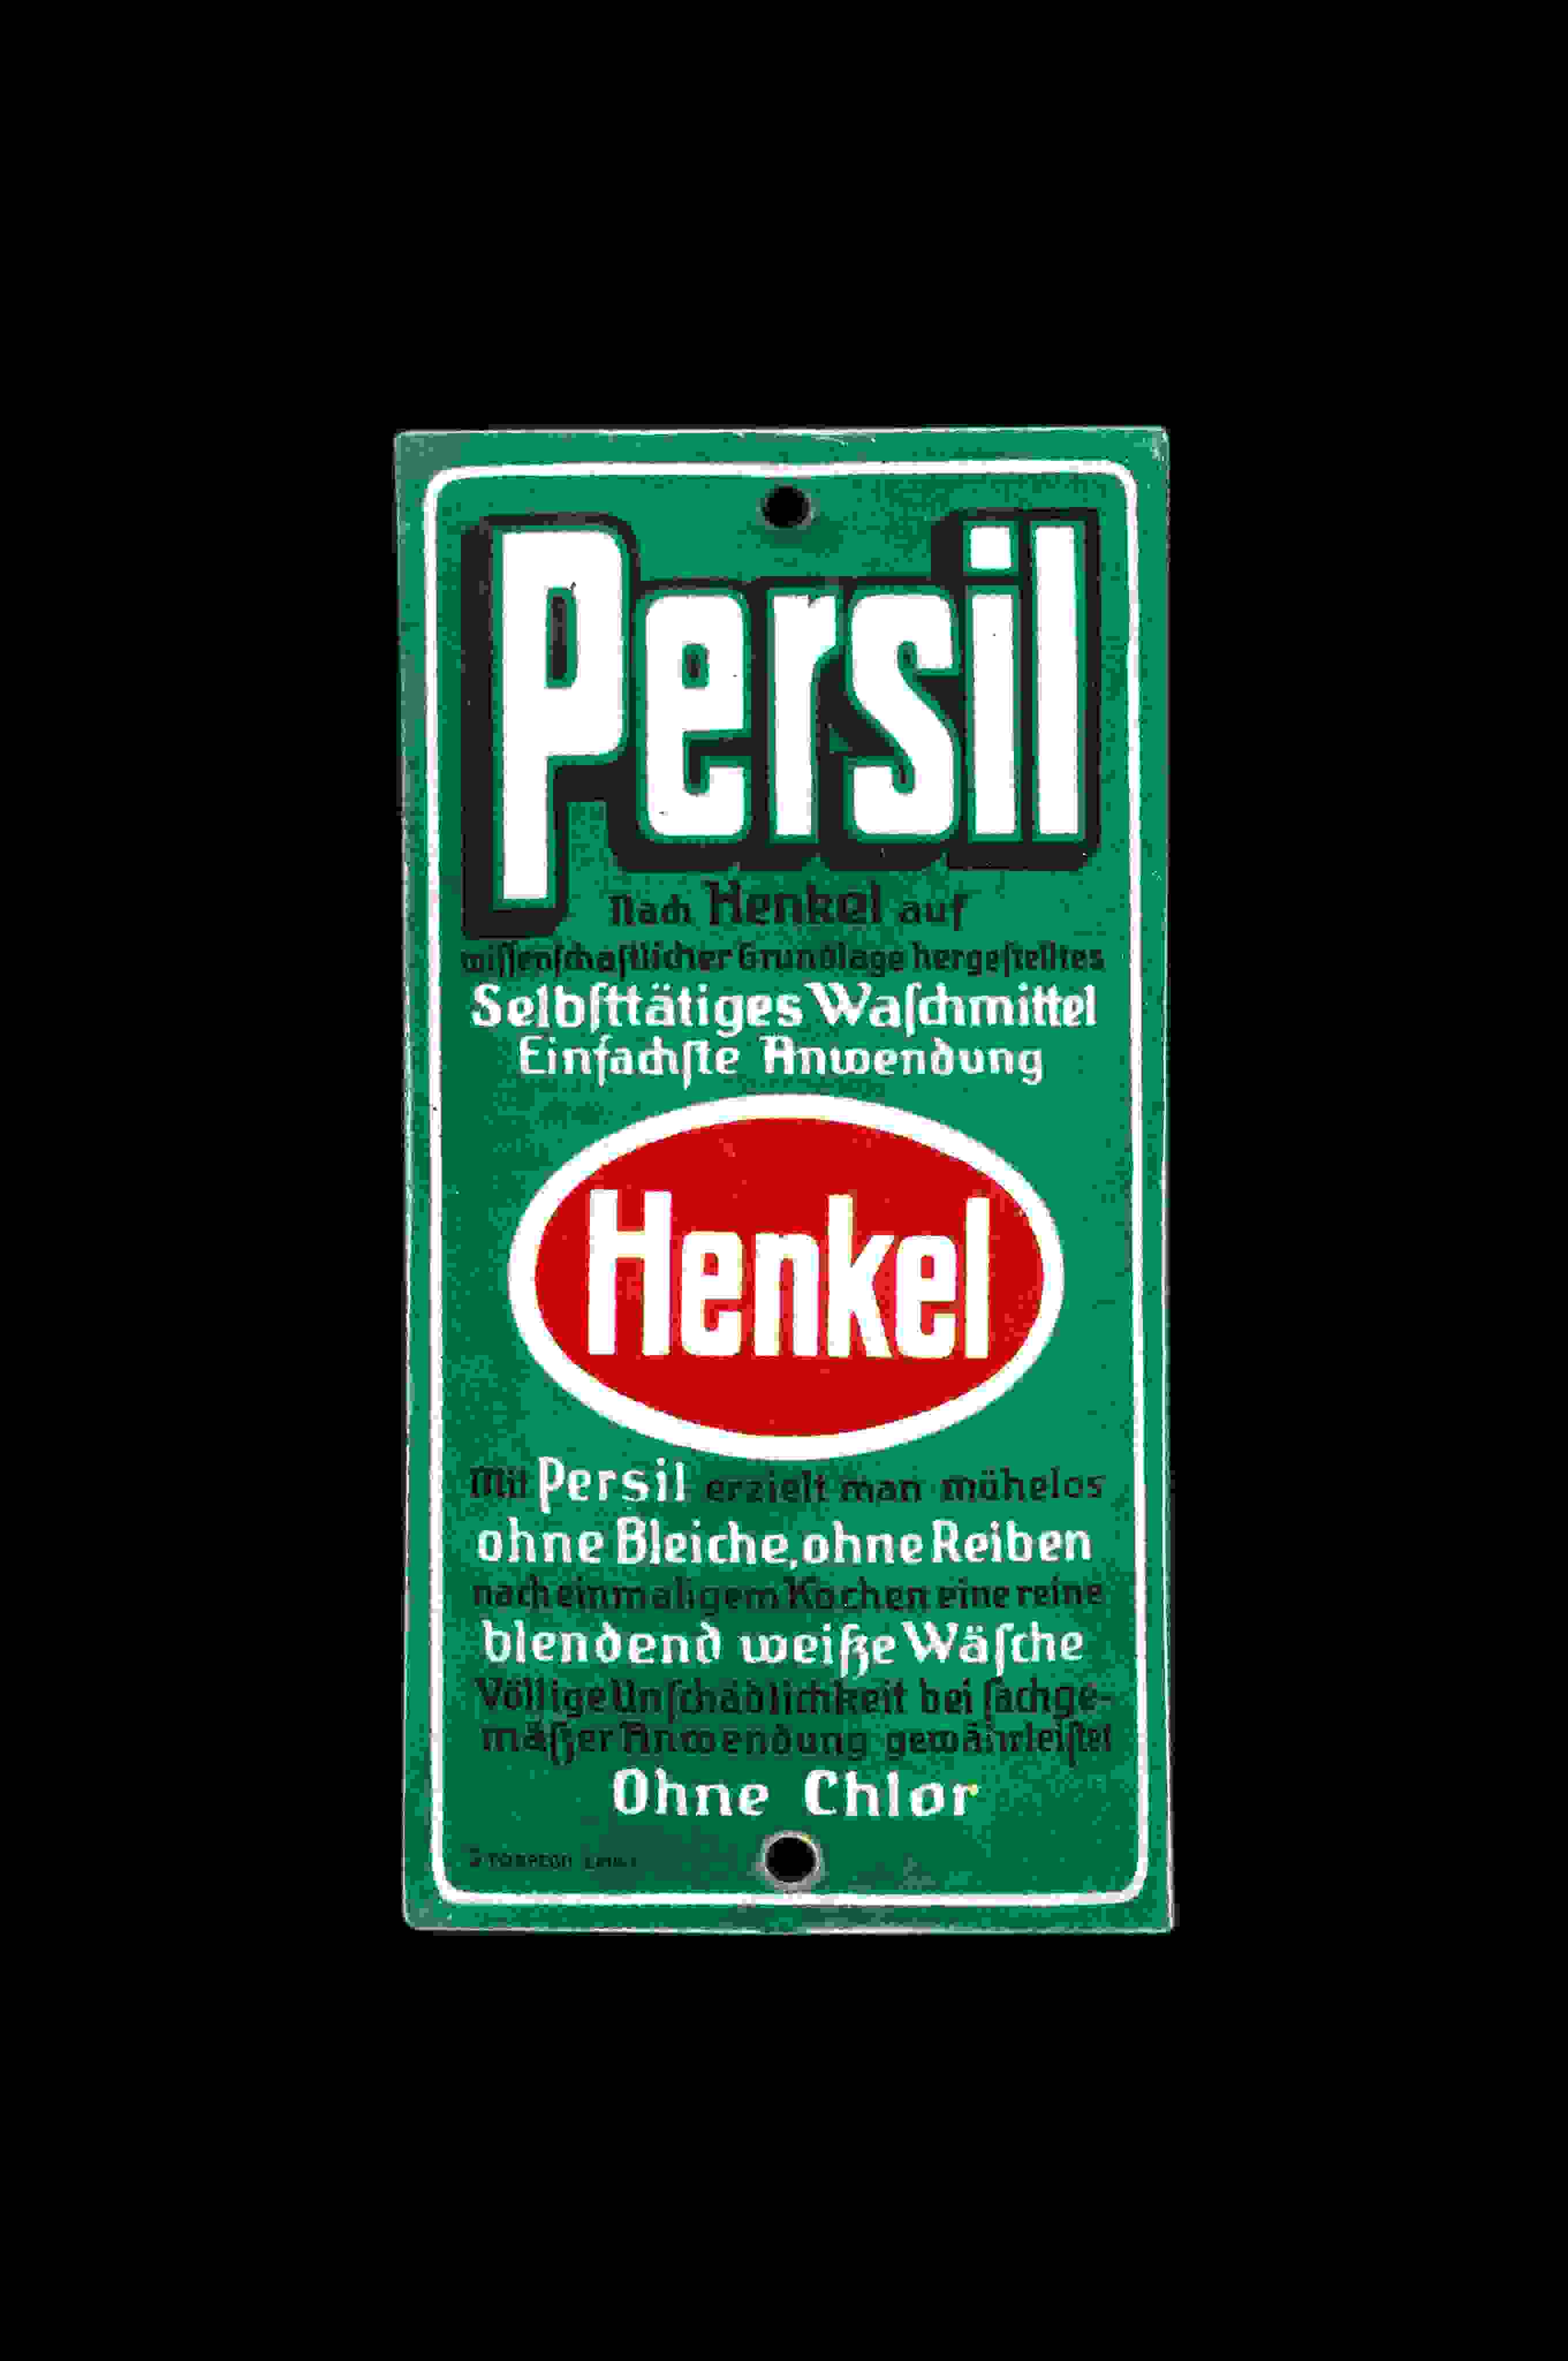 Persil-Henkel 